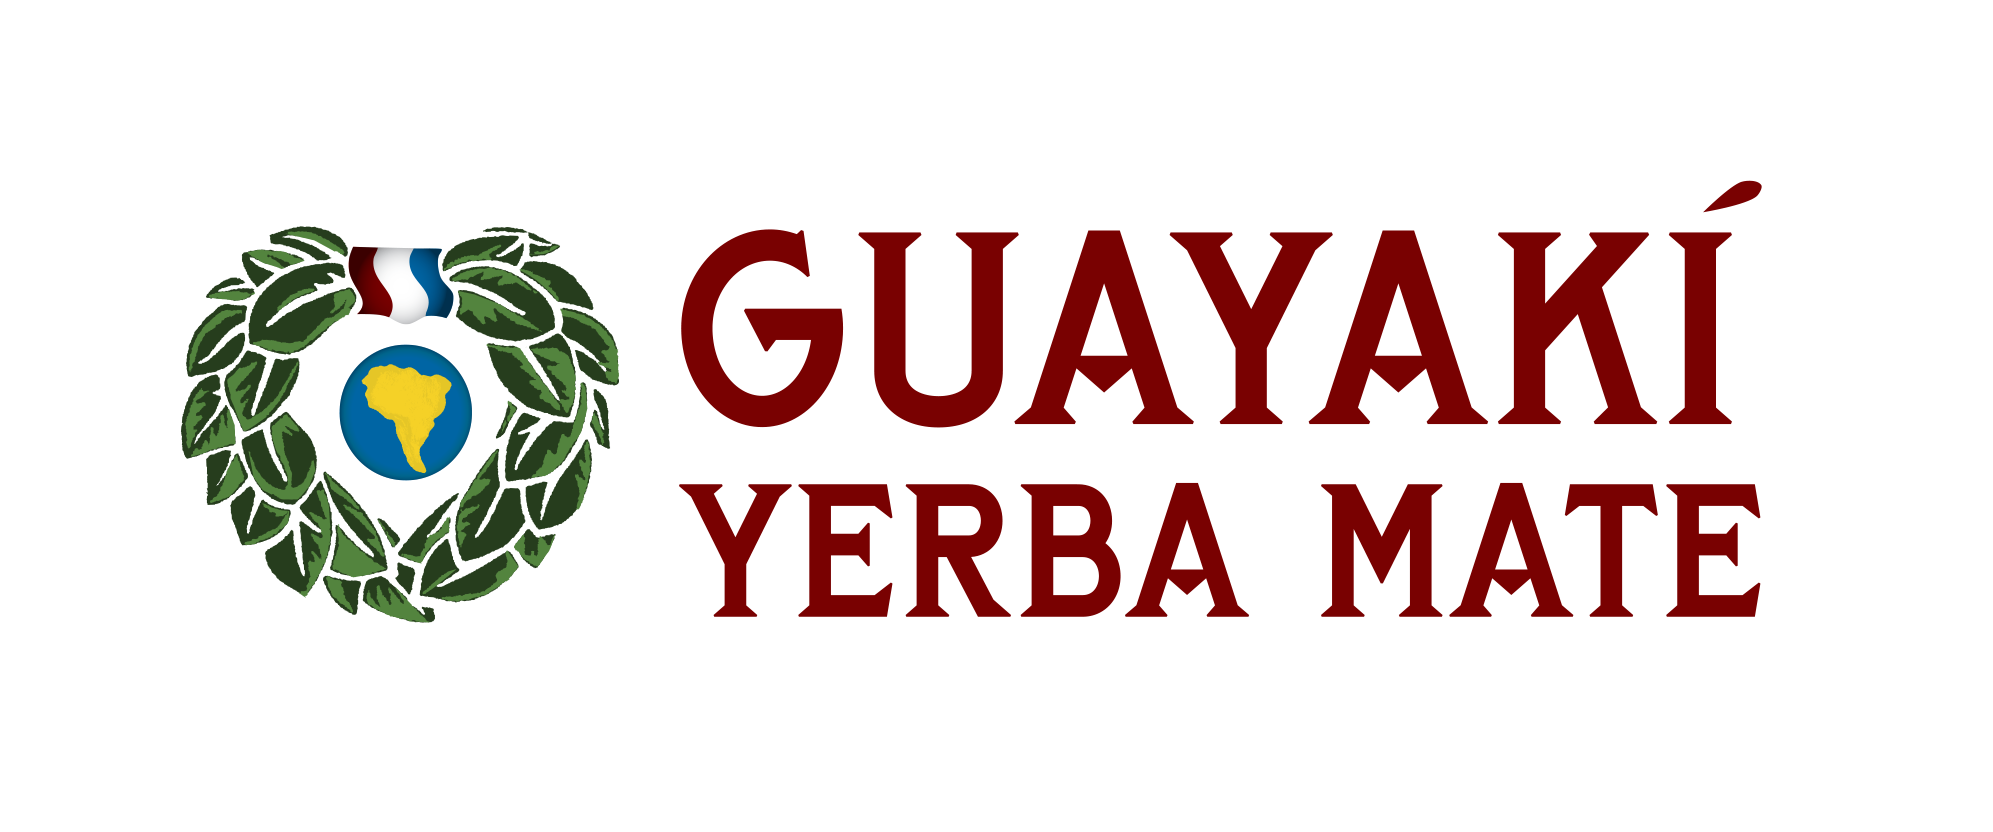 guayaki.com